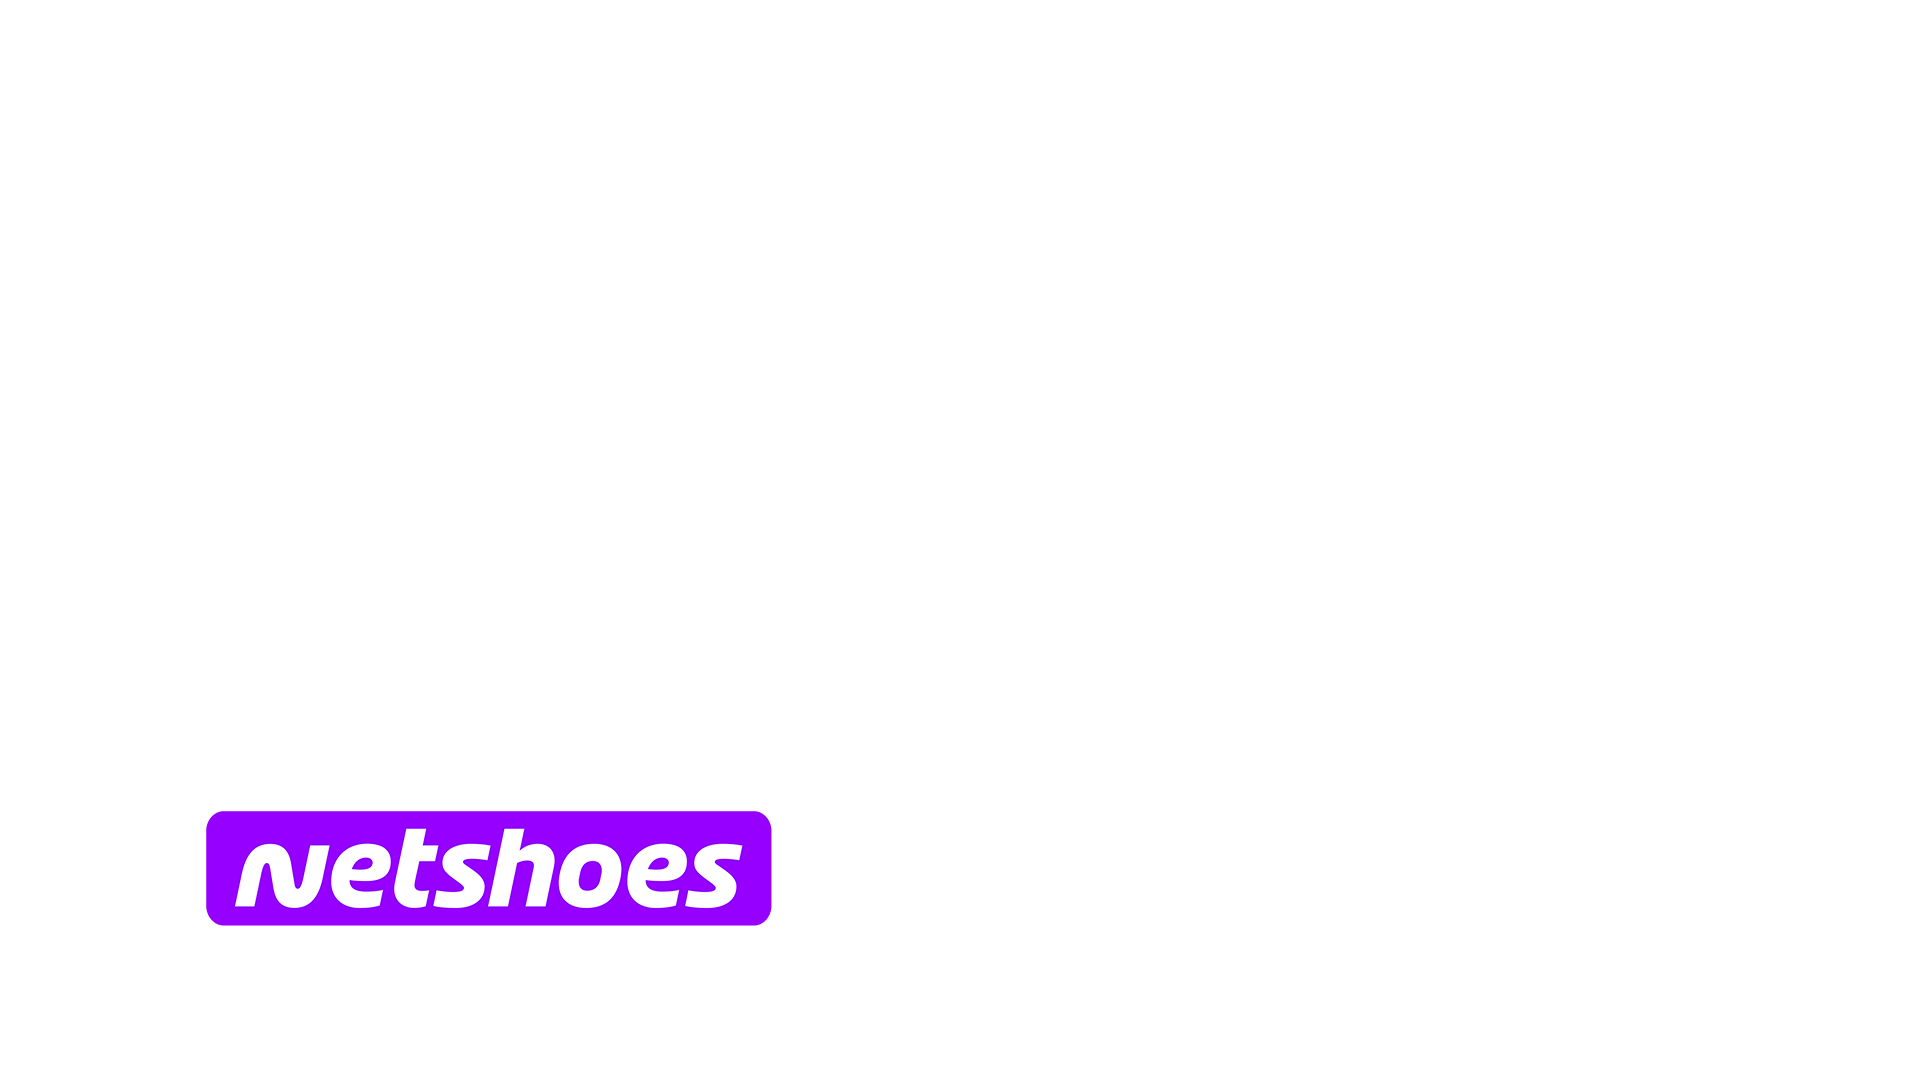 Super Copa Pioneer